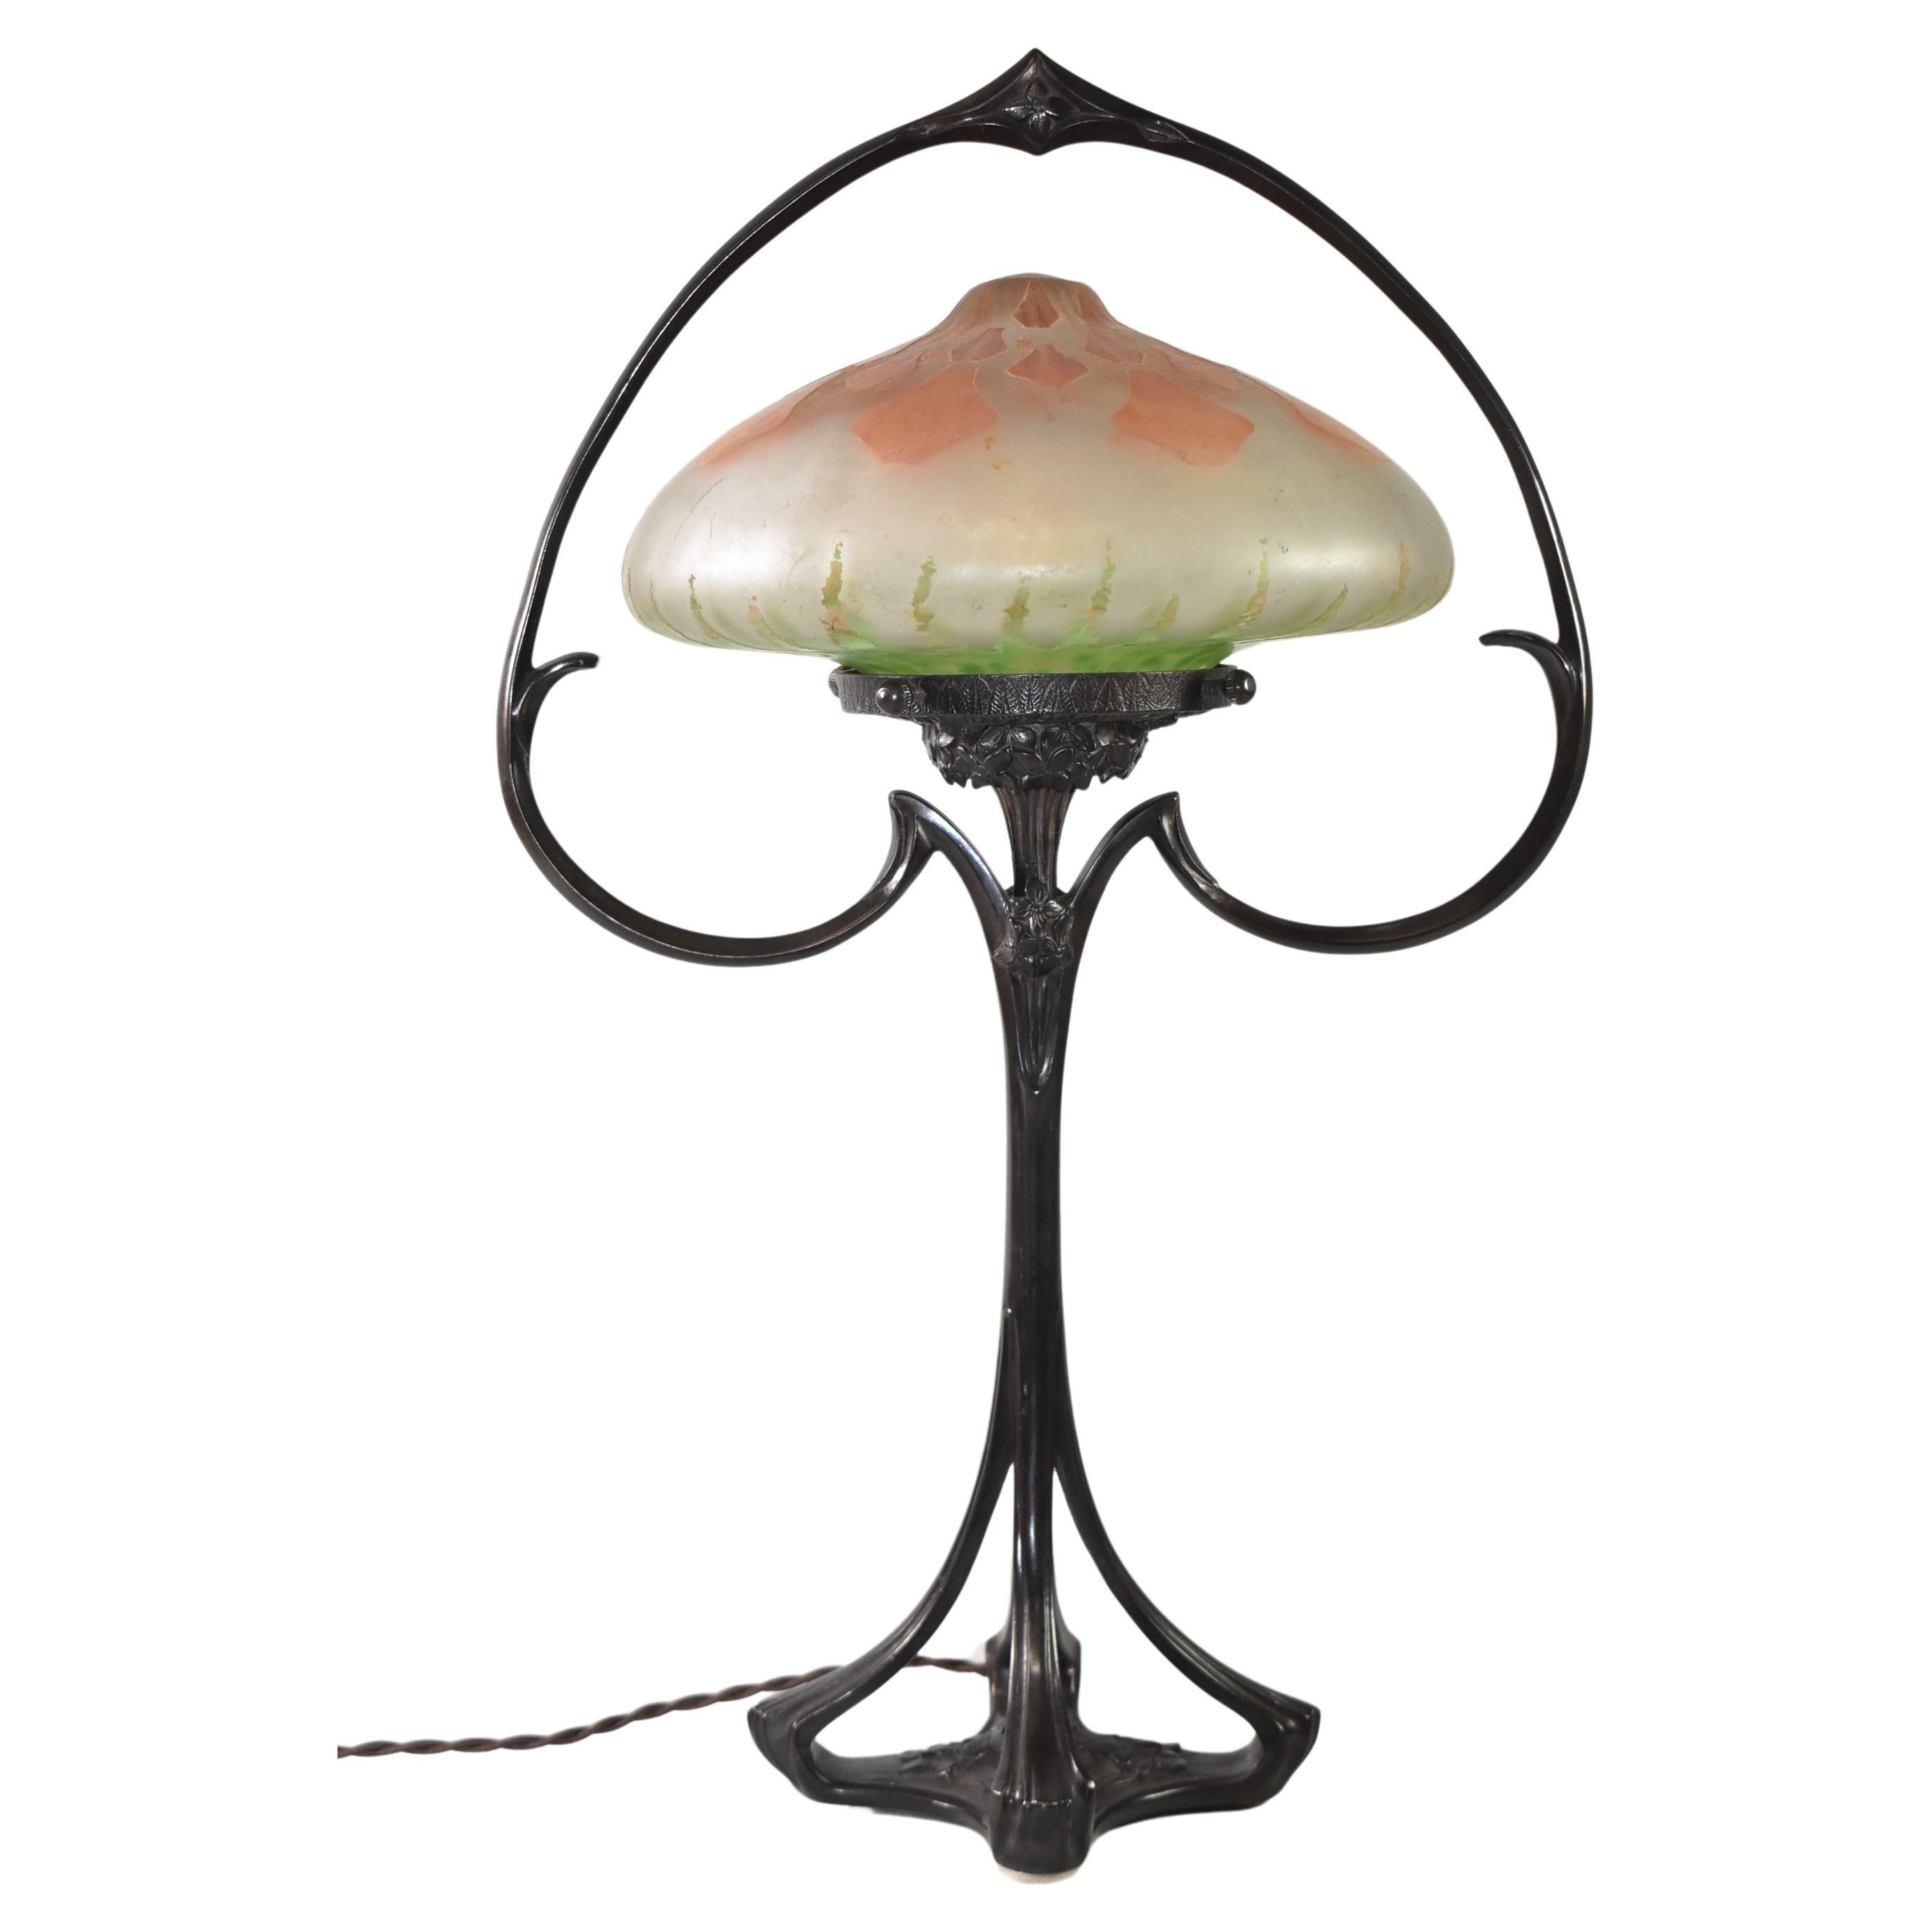 Art Nouveau Table Lamp with Daum Nancy Shade, Circa 1900 France